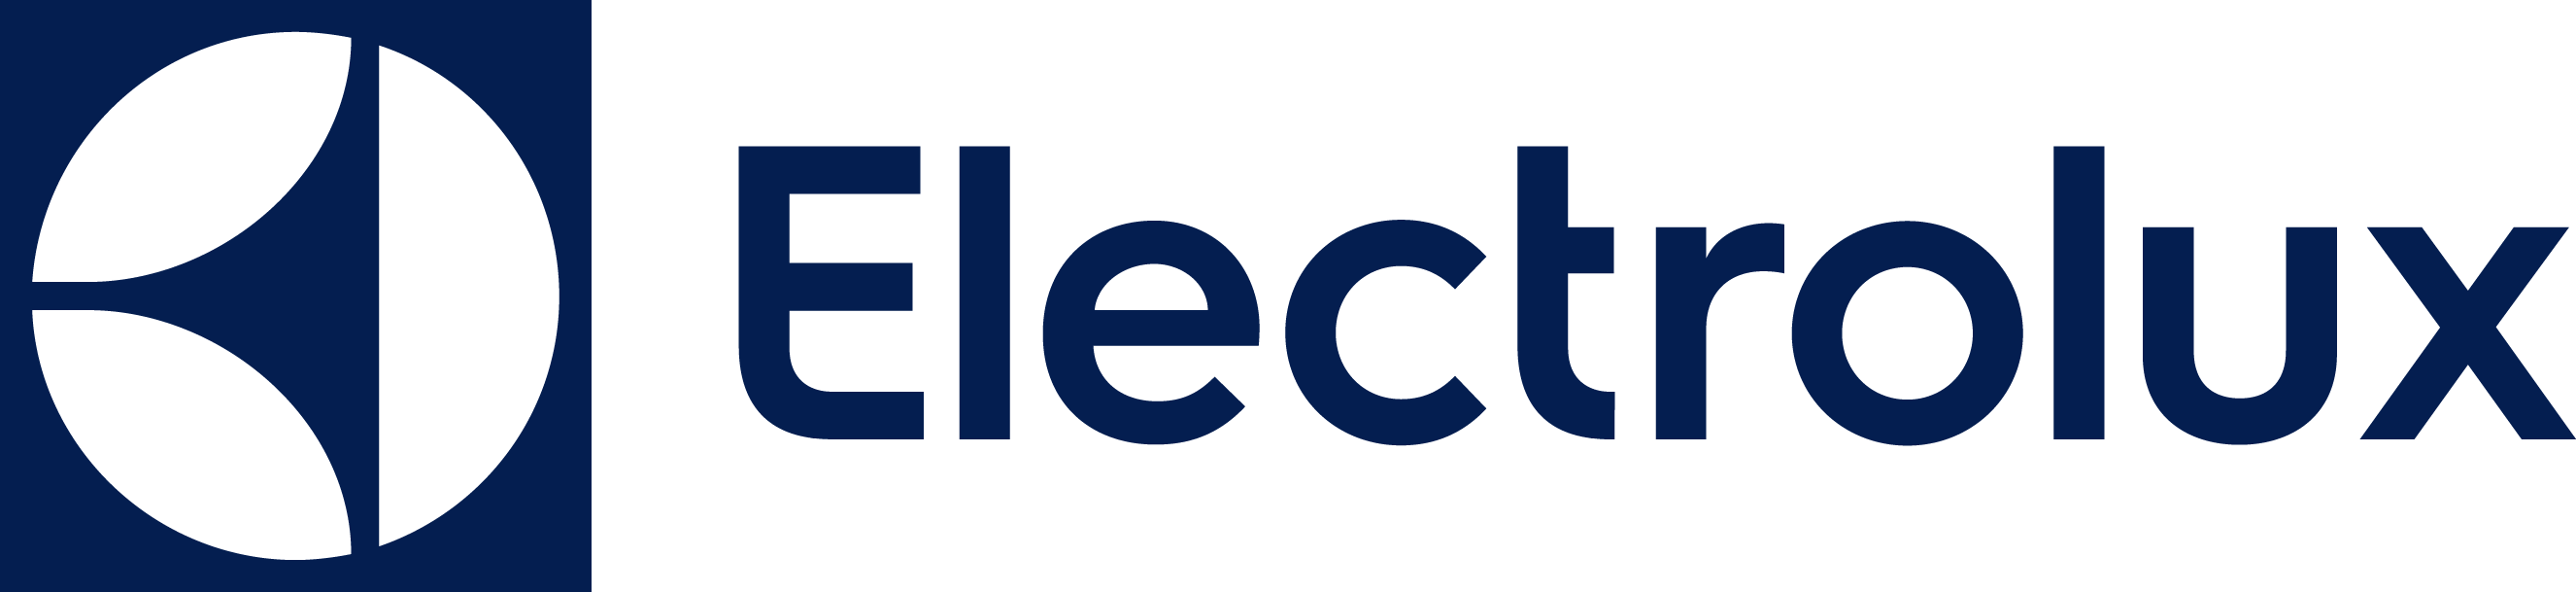 Electrolux logo master blue RGB